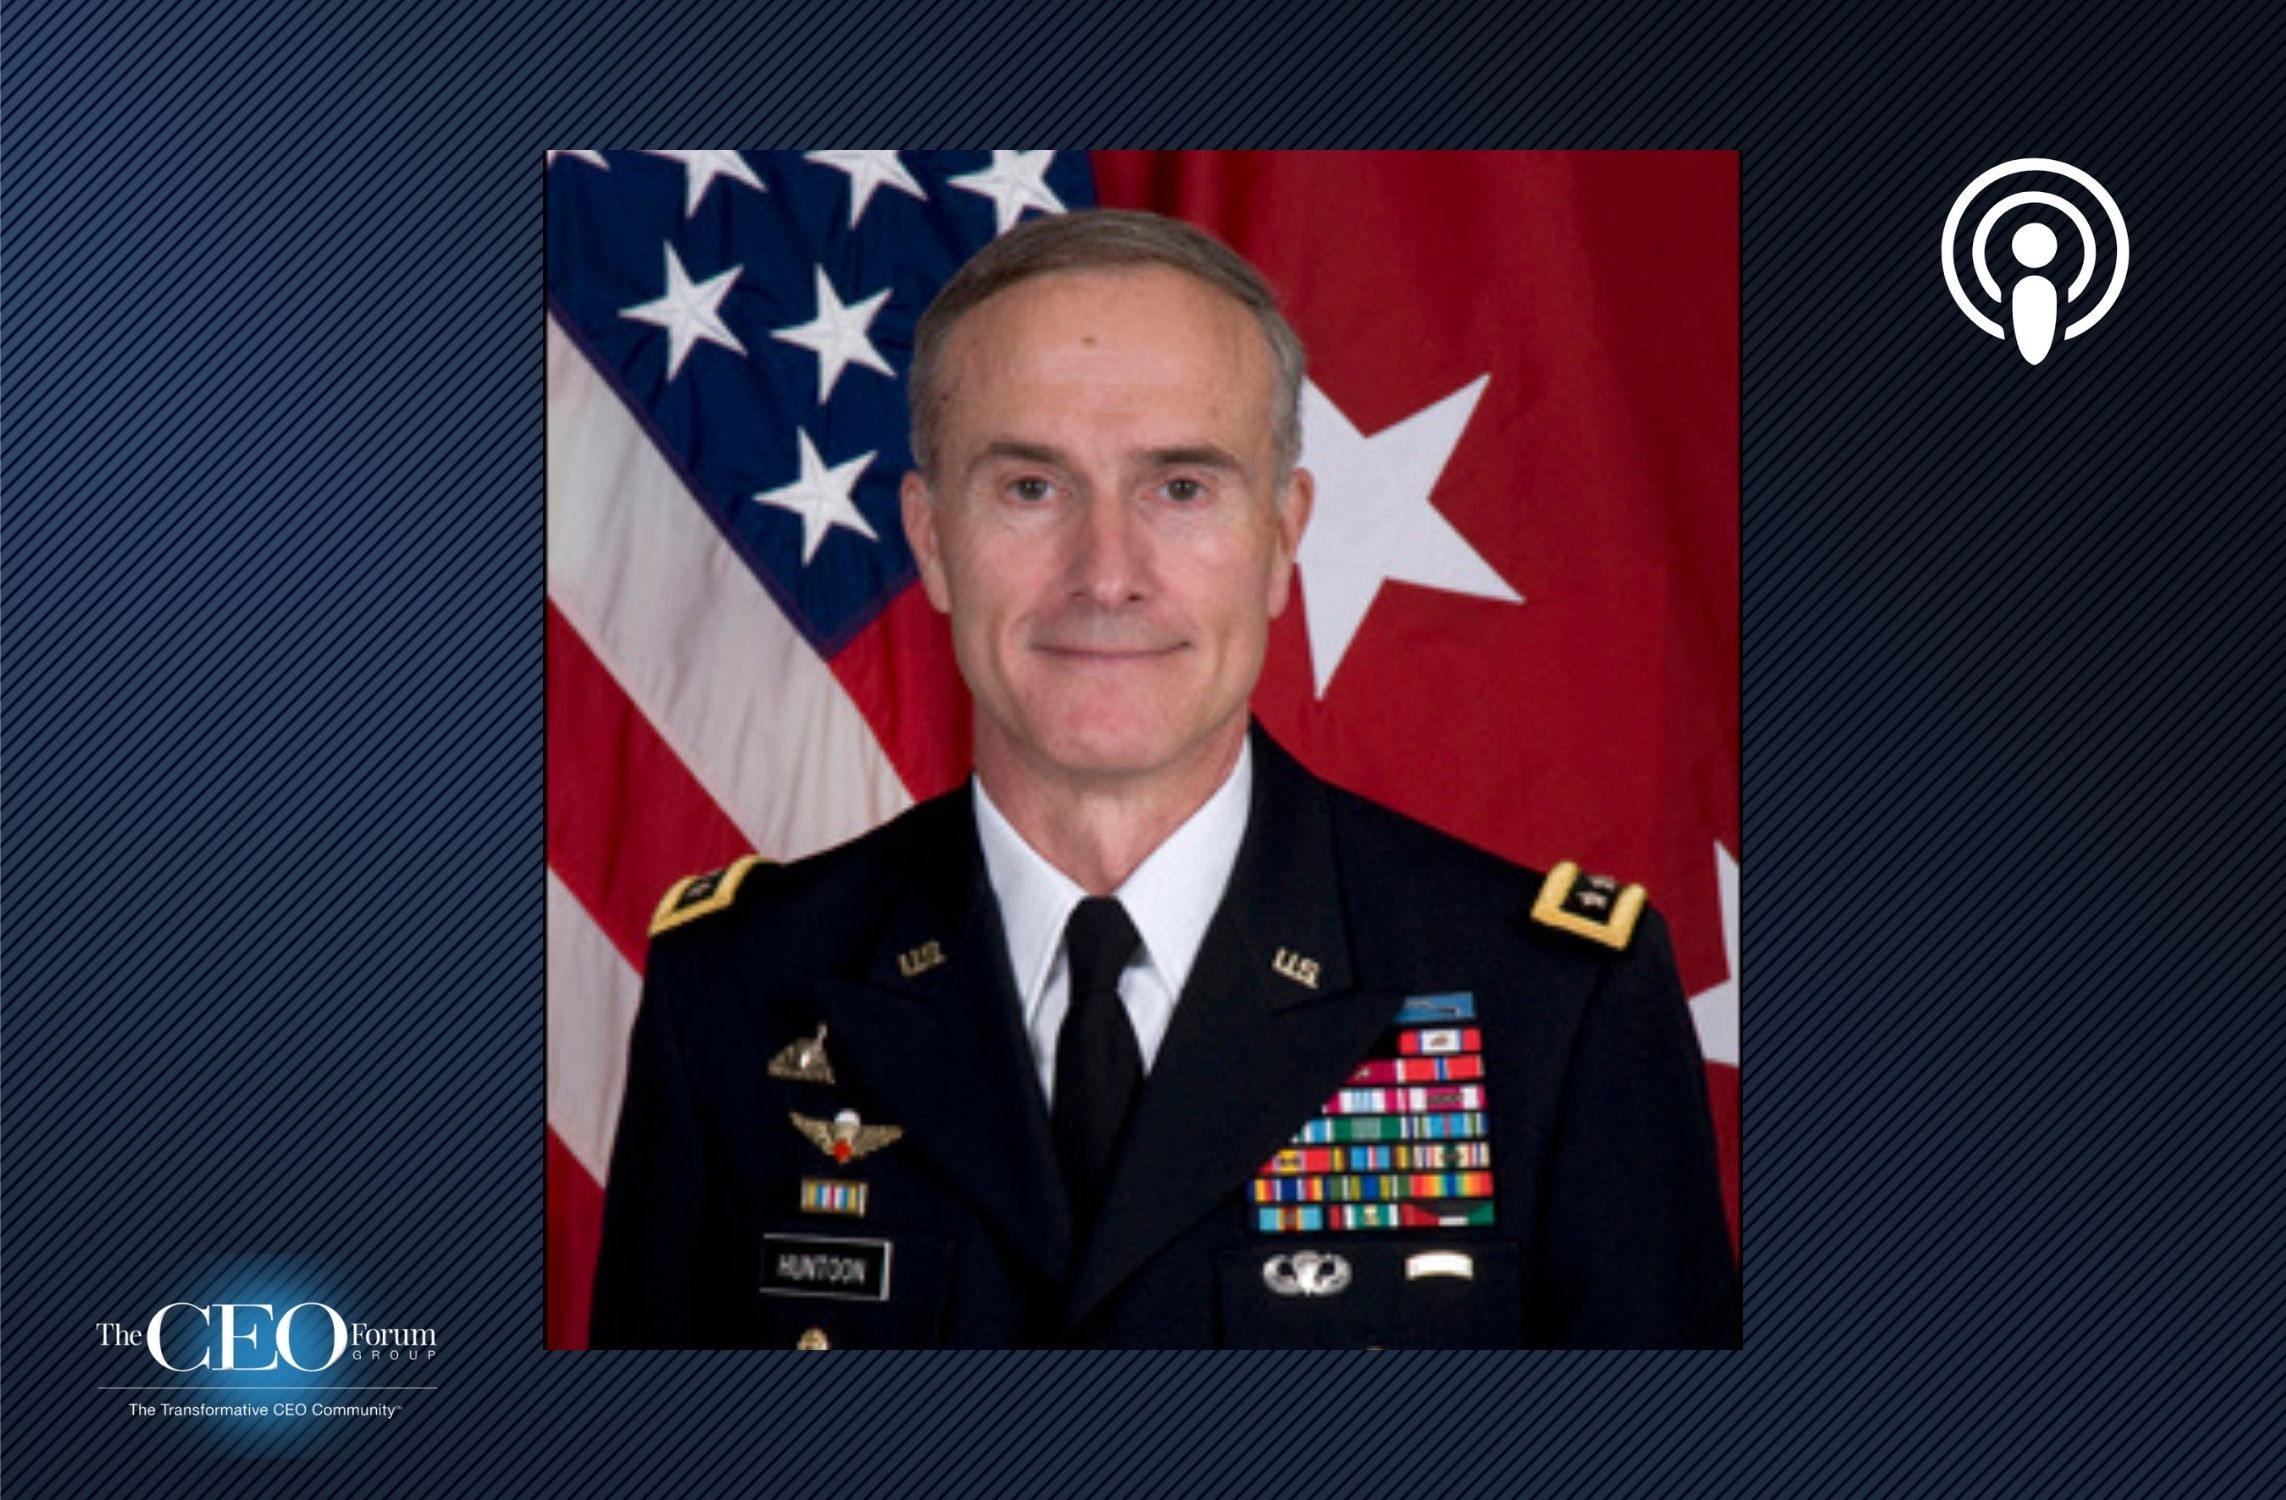 Lt. General David H. Huntoon, Jr., U.S. Military Academy at West Point (01/09/2011)